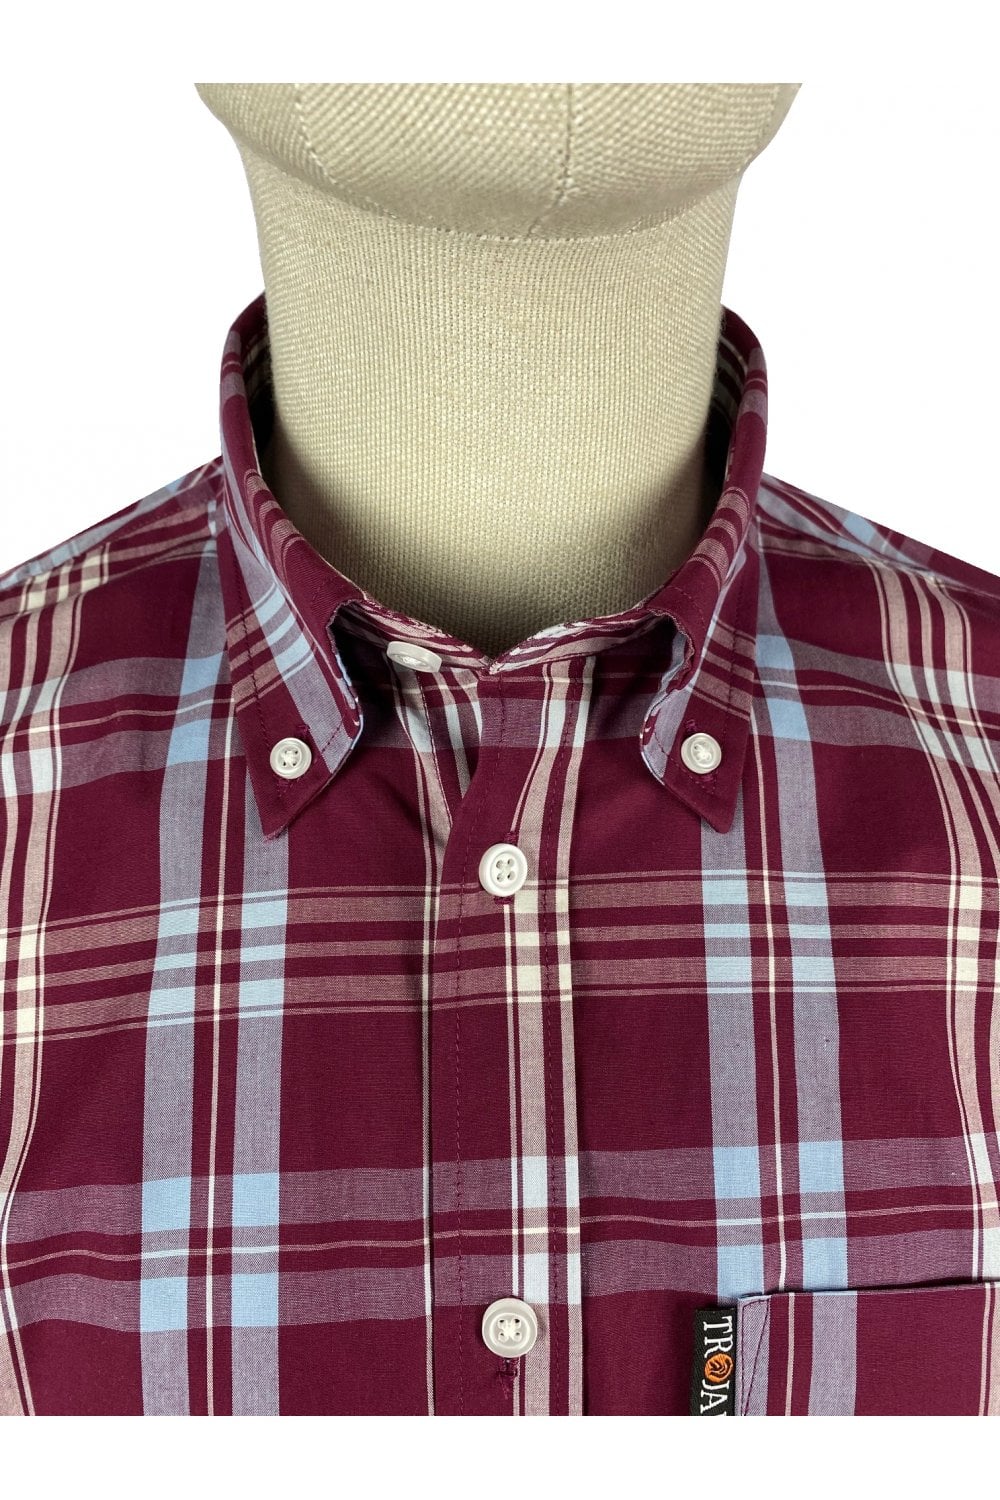 Trojan Check SS Shirt With Free Matching Pocket Square TC/1003 Port - Raw Menswear